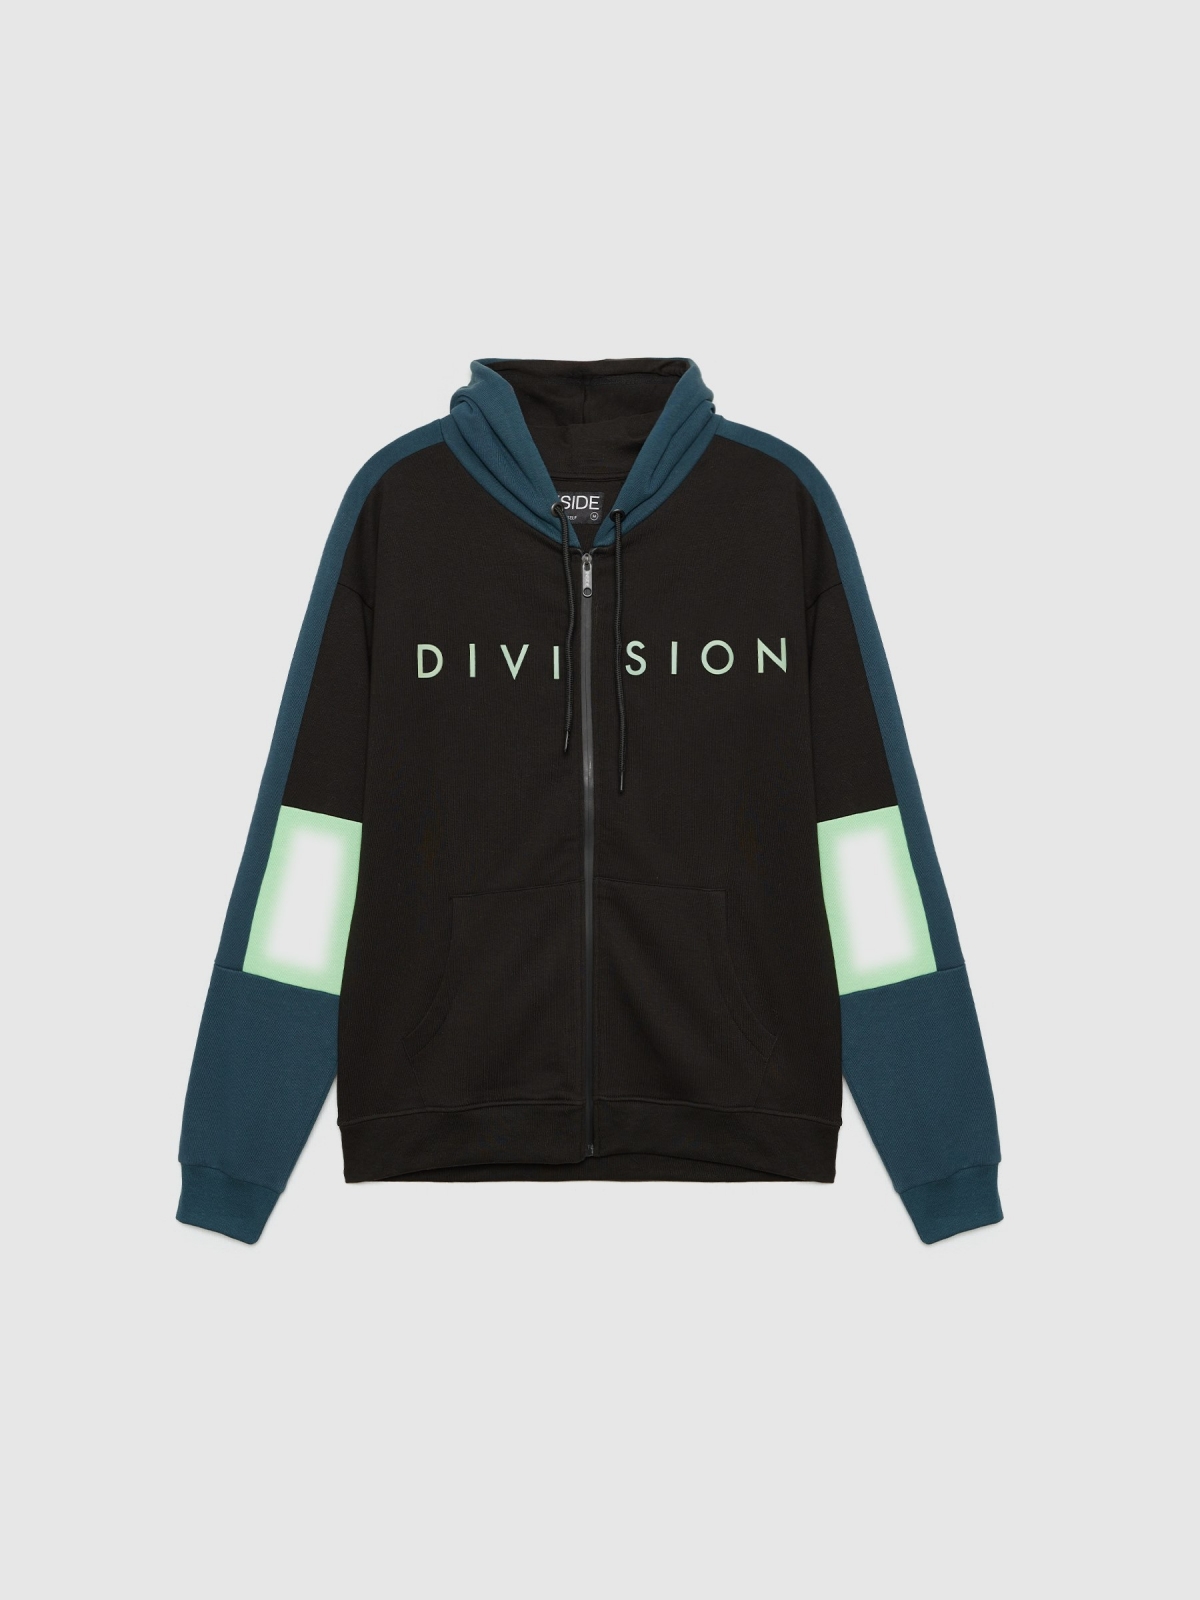  Division hooded sweatshirt black